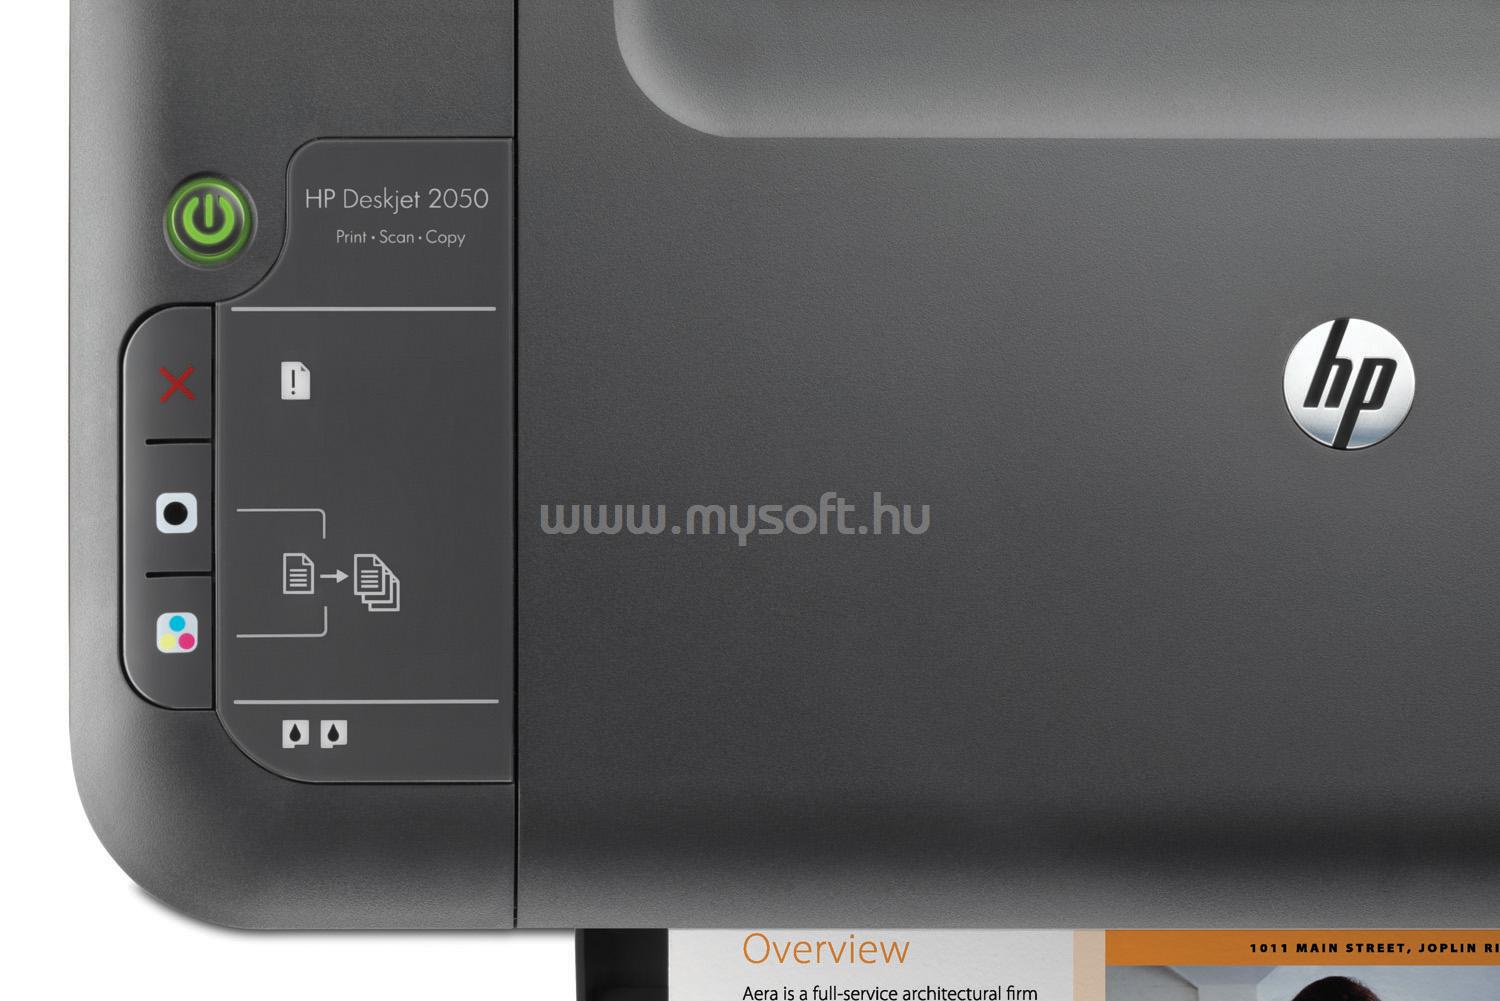 Impresora HP Deskjet 2050 - YouTube